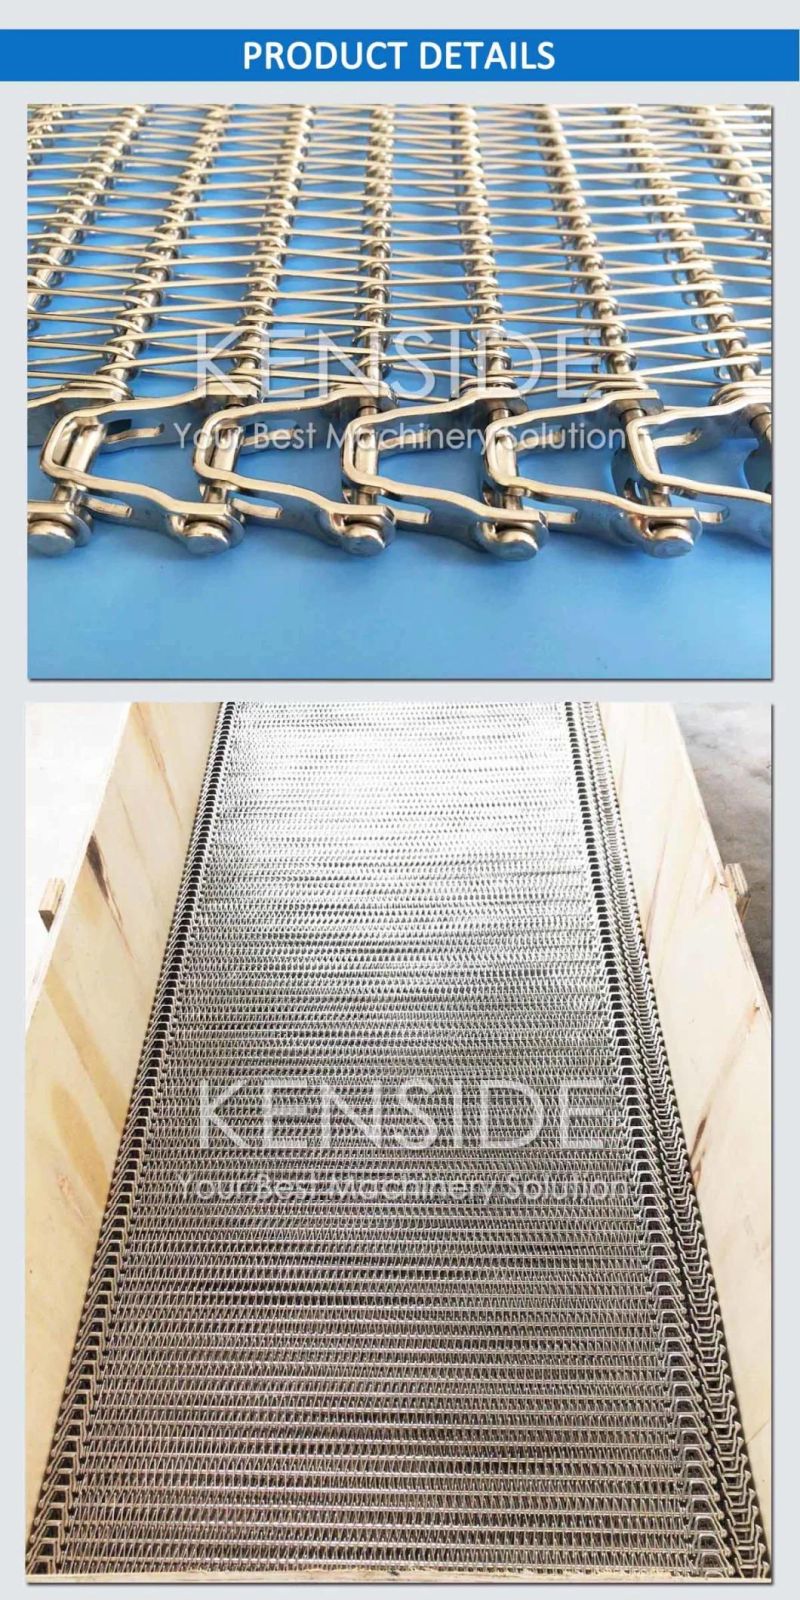 Stainless Steel Belting Spiral Conveyor Belts Reduced Radius Belts for Freezing Seafood